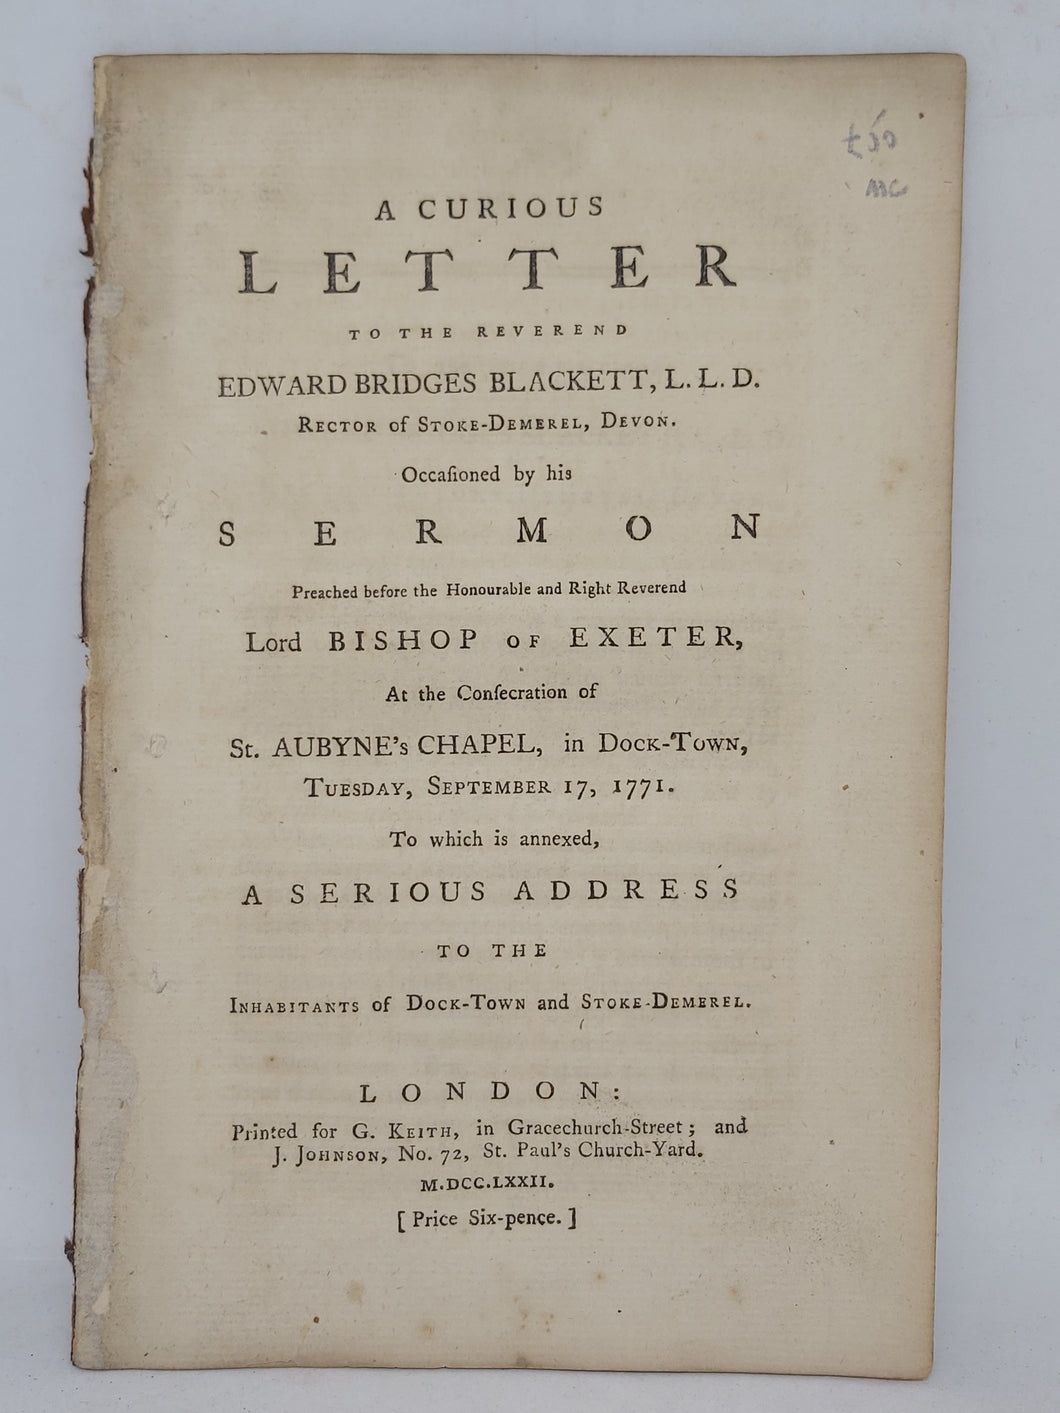 A Curious Letter to the Reverend Edward Bridges Blackett, 1772